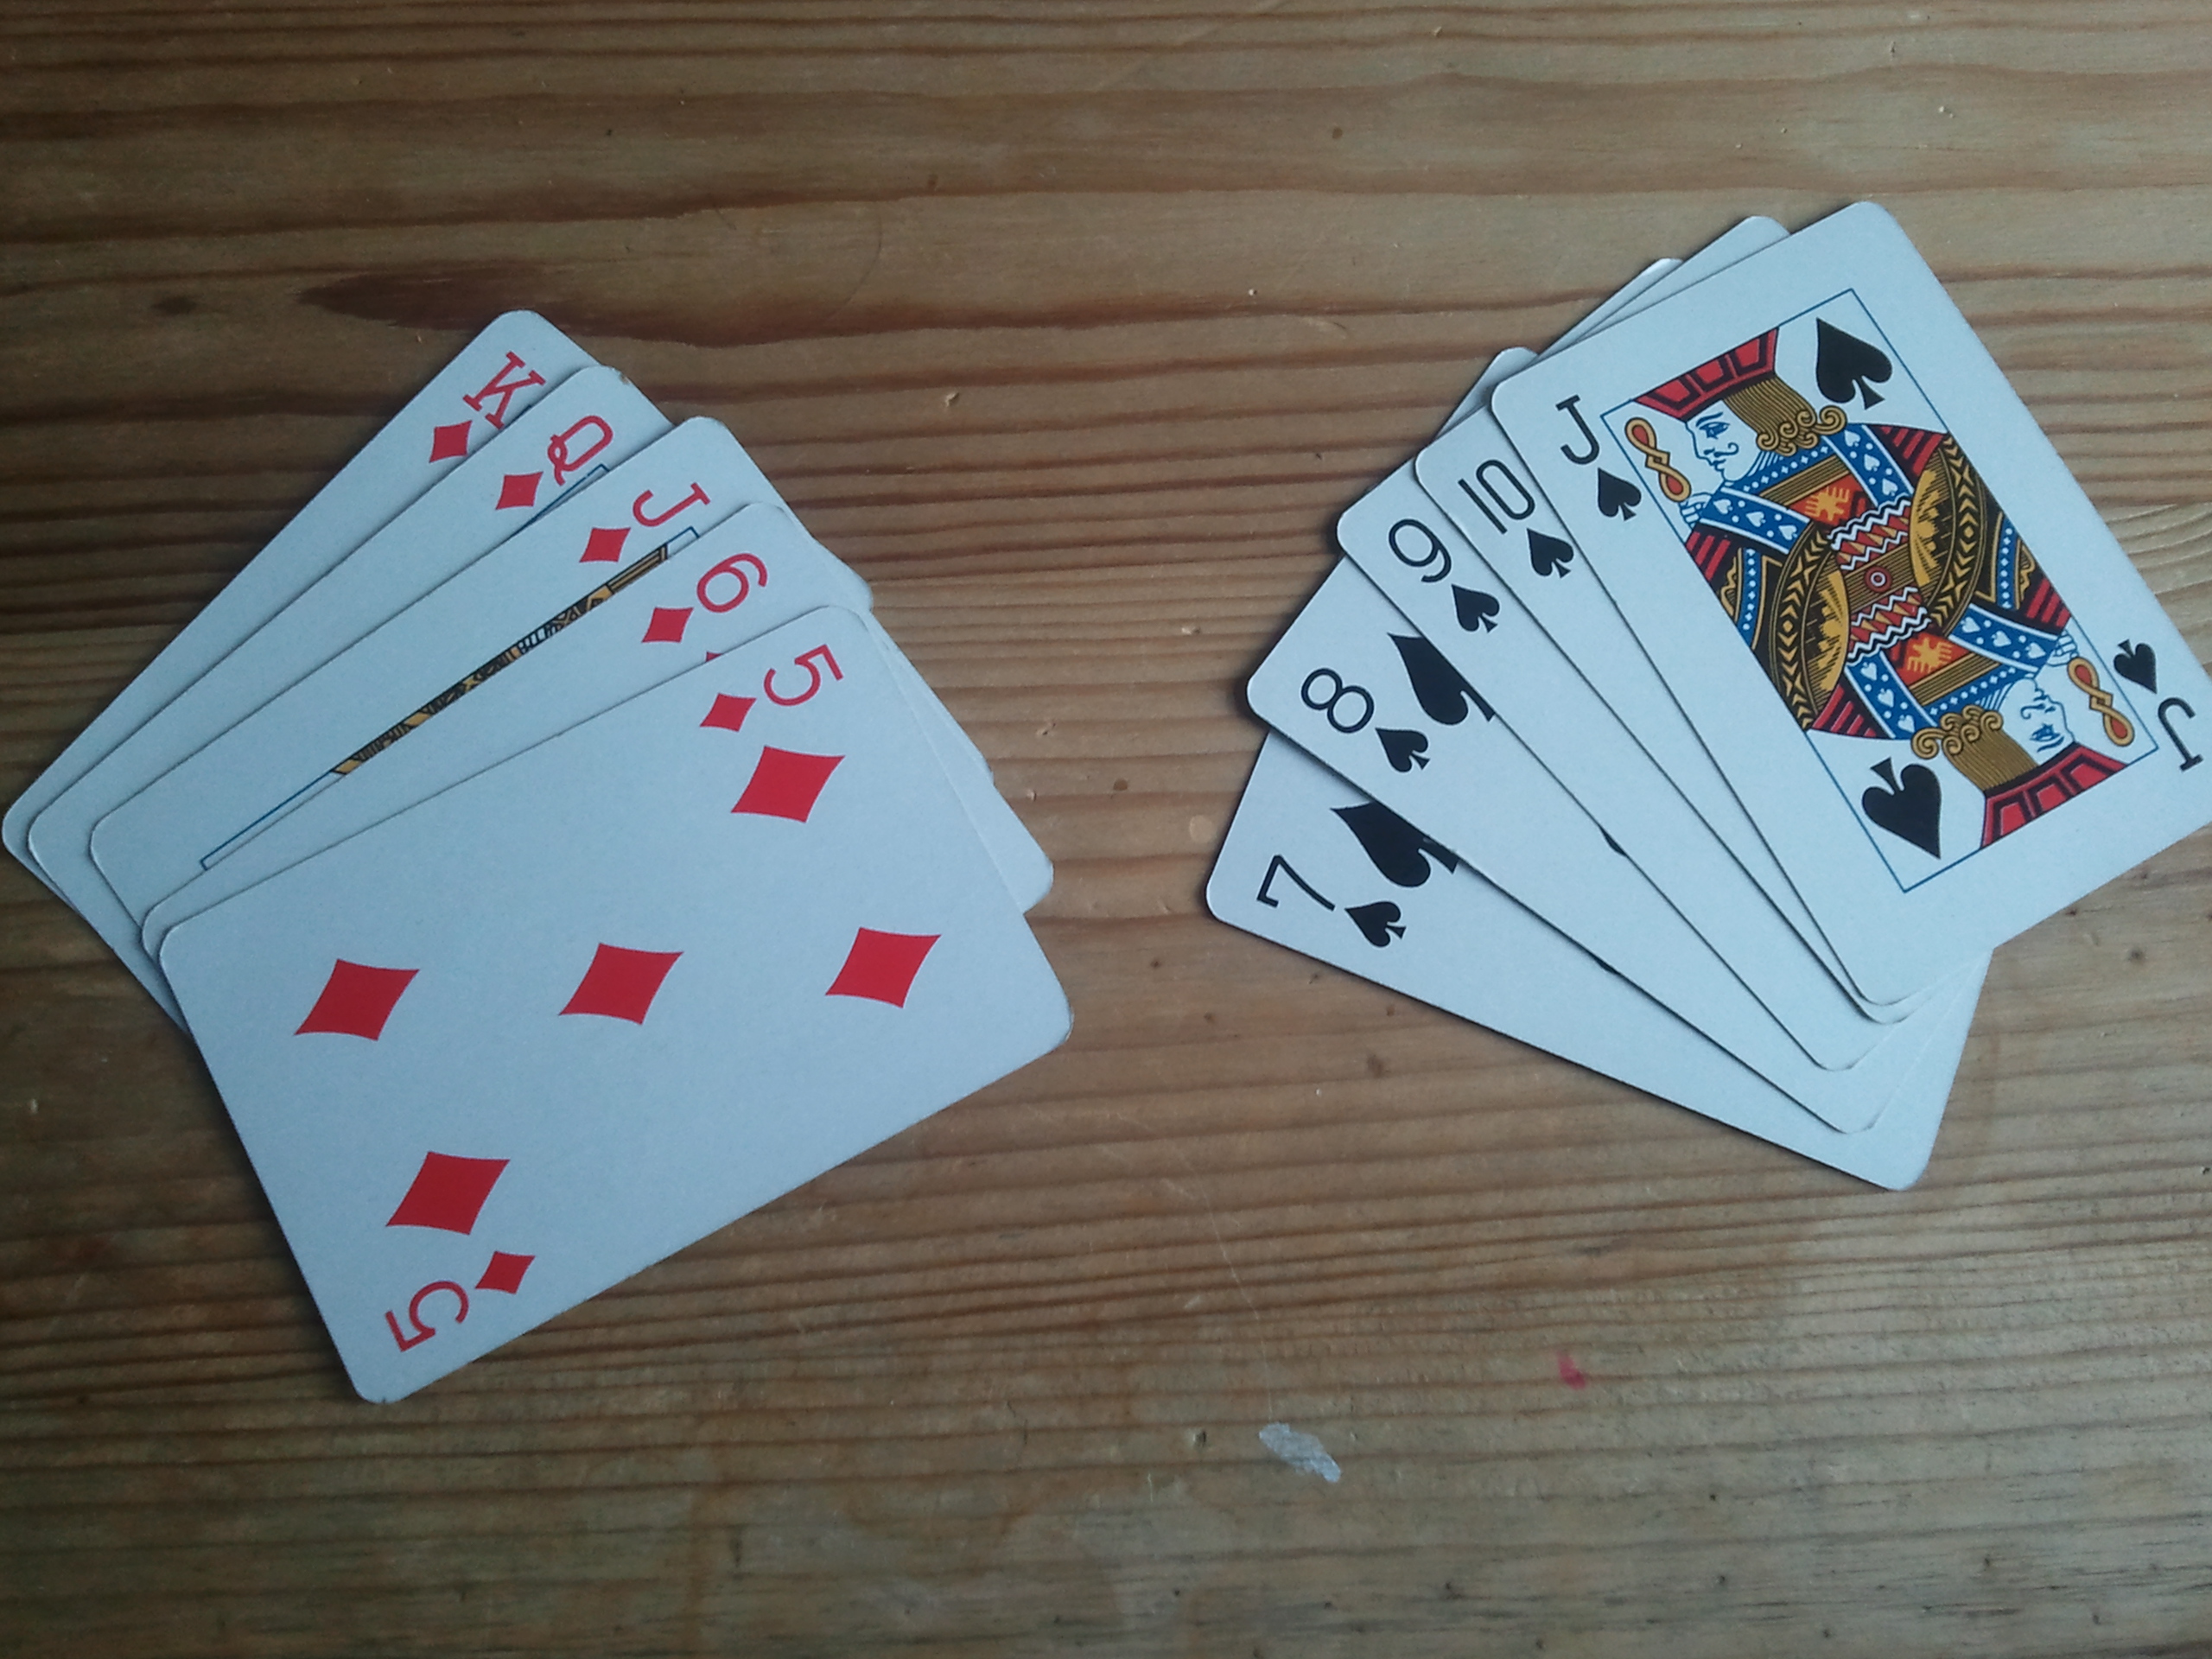 название карт в покере на столе